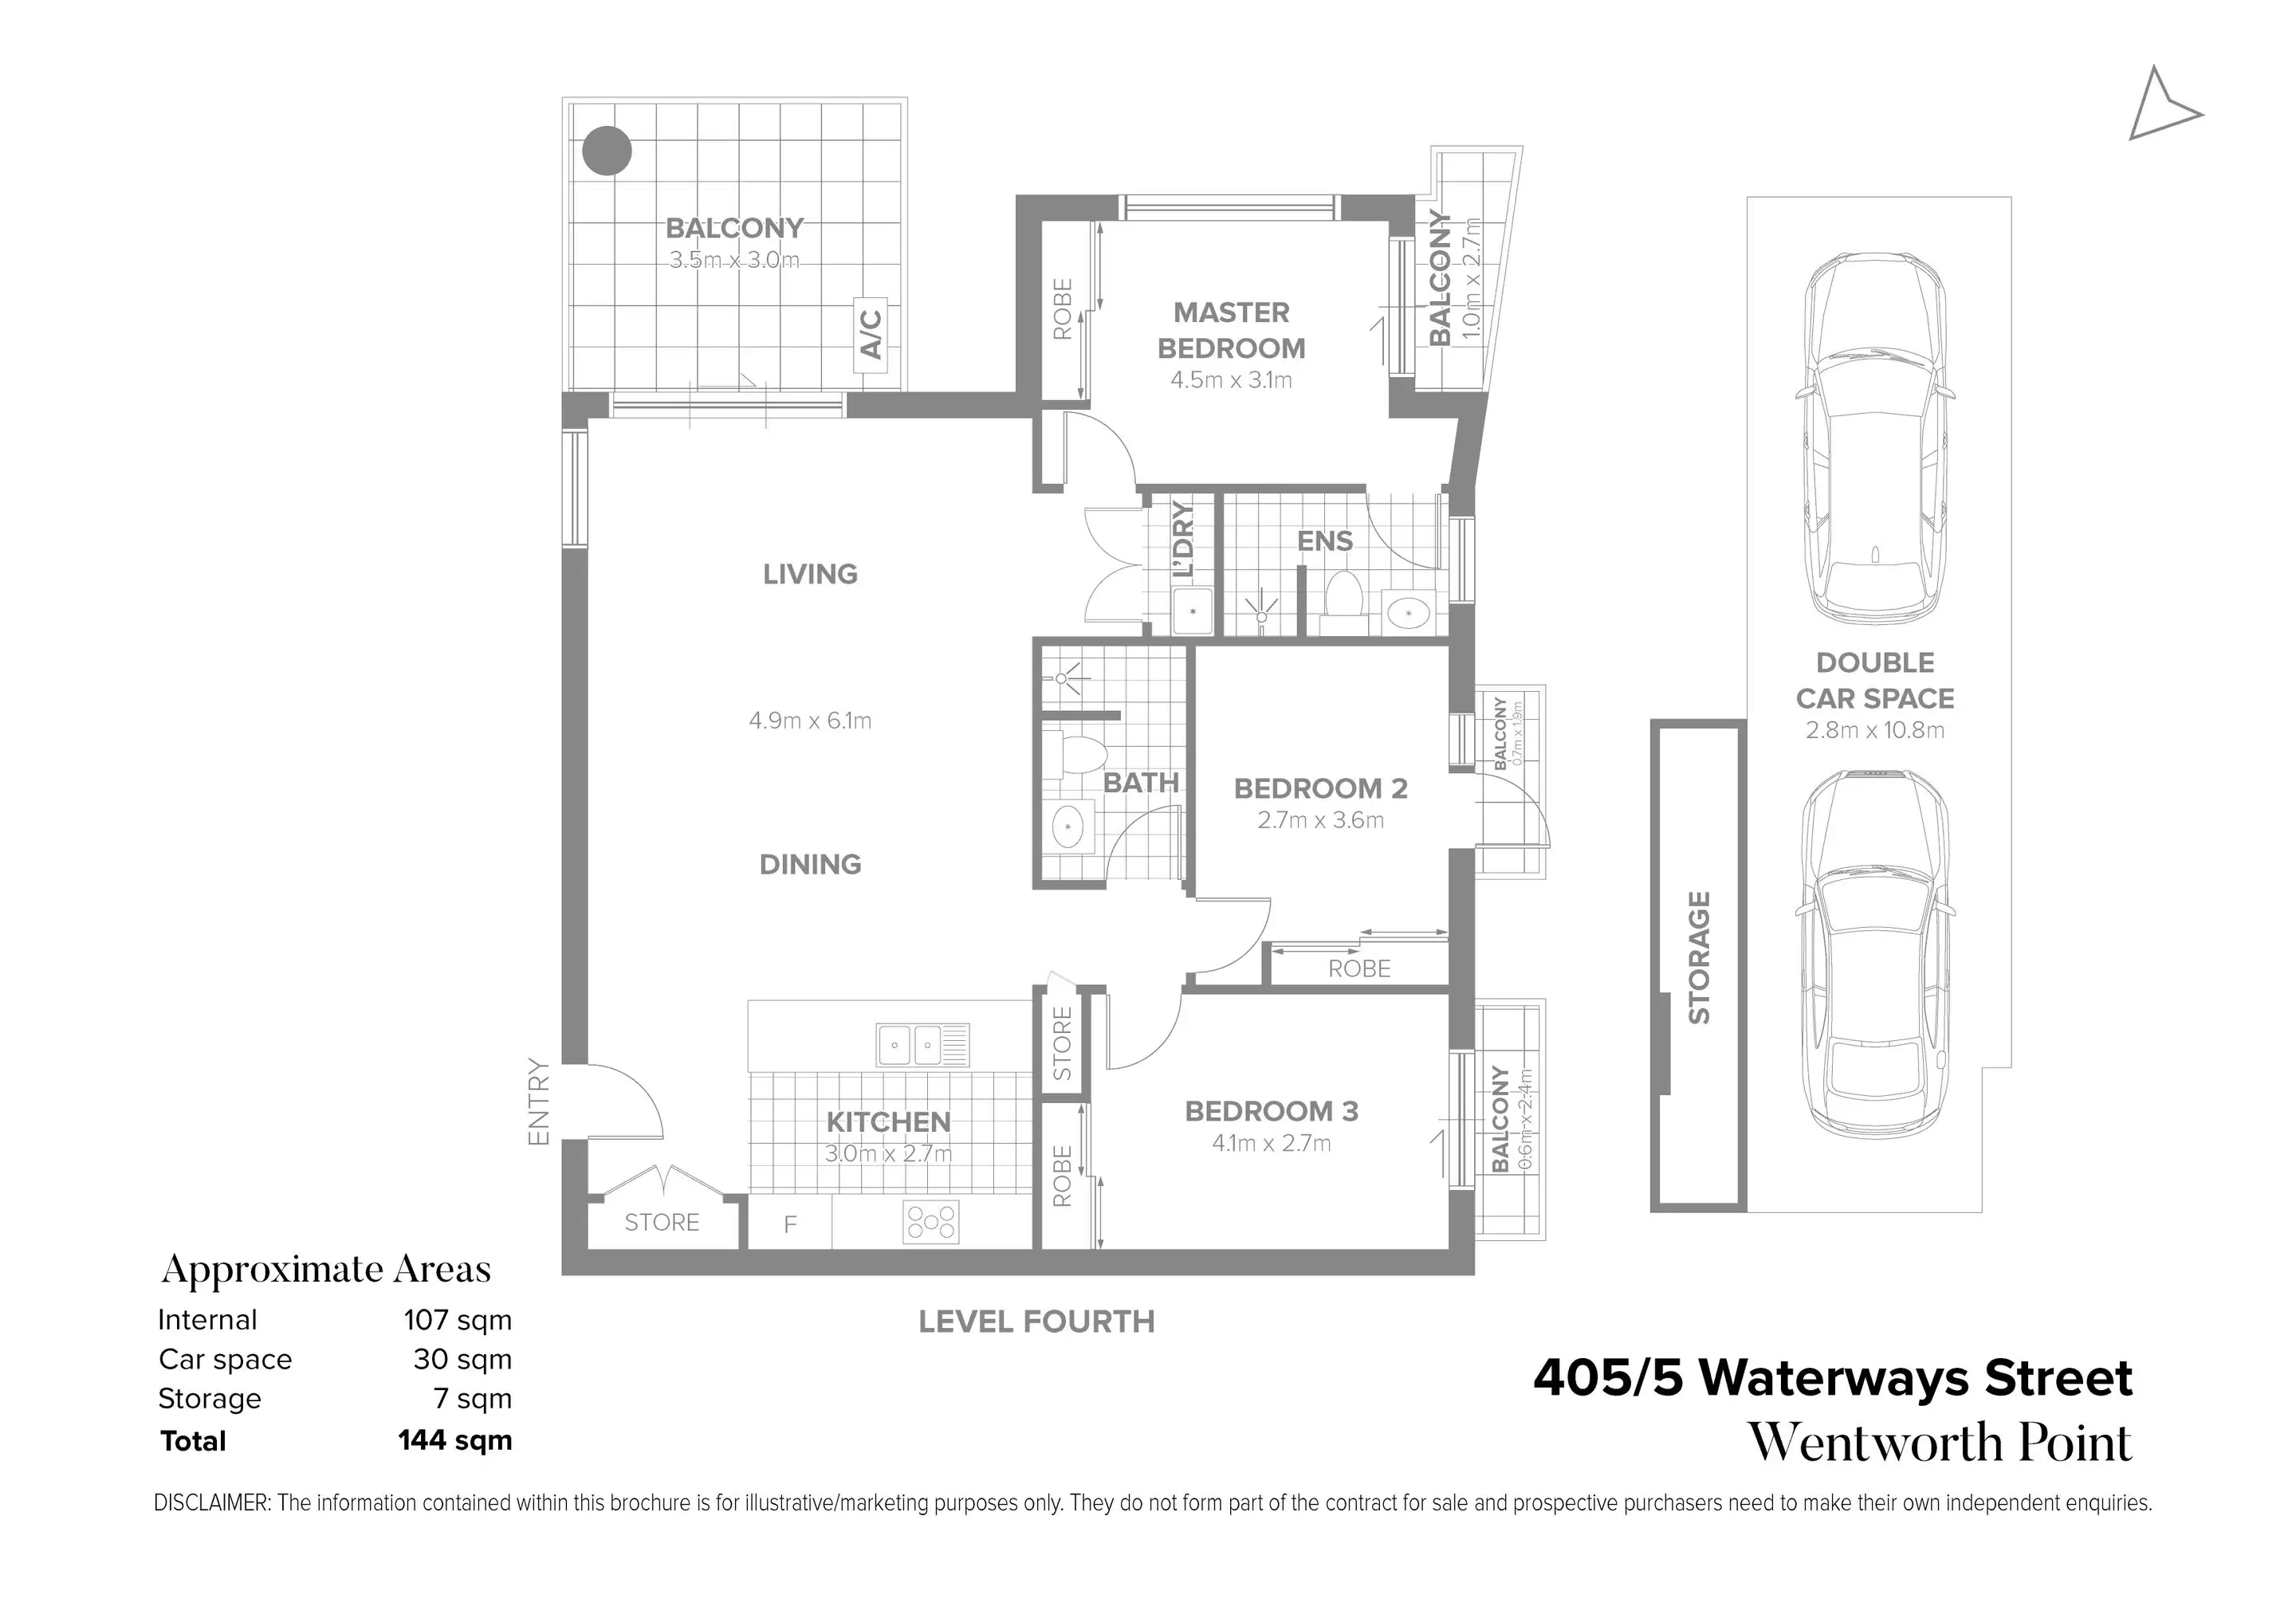 405/5 Waterways Street, Wentworth Point Sold by Chidiac Realty - floorplan